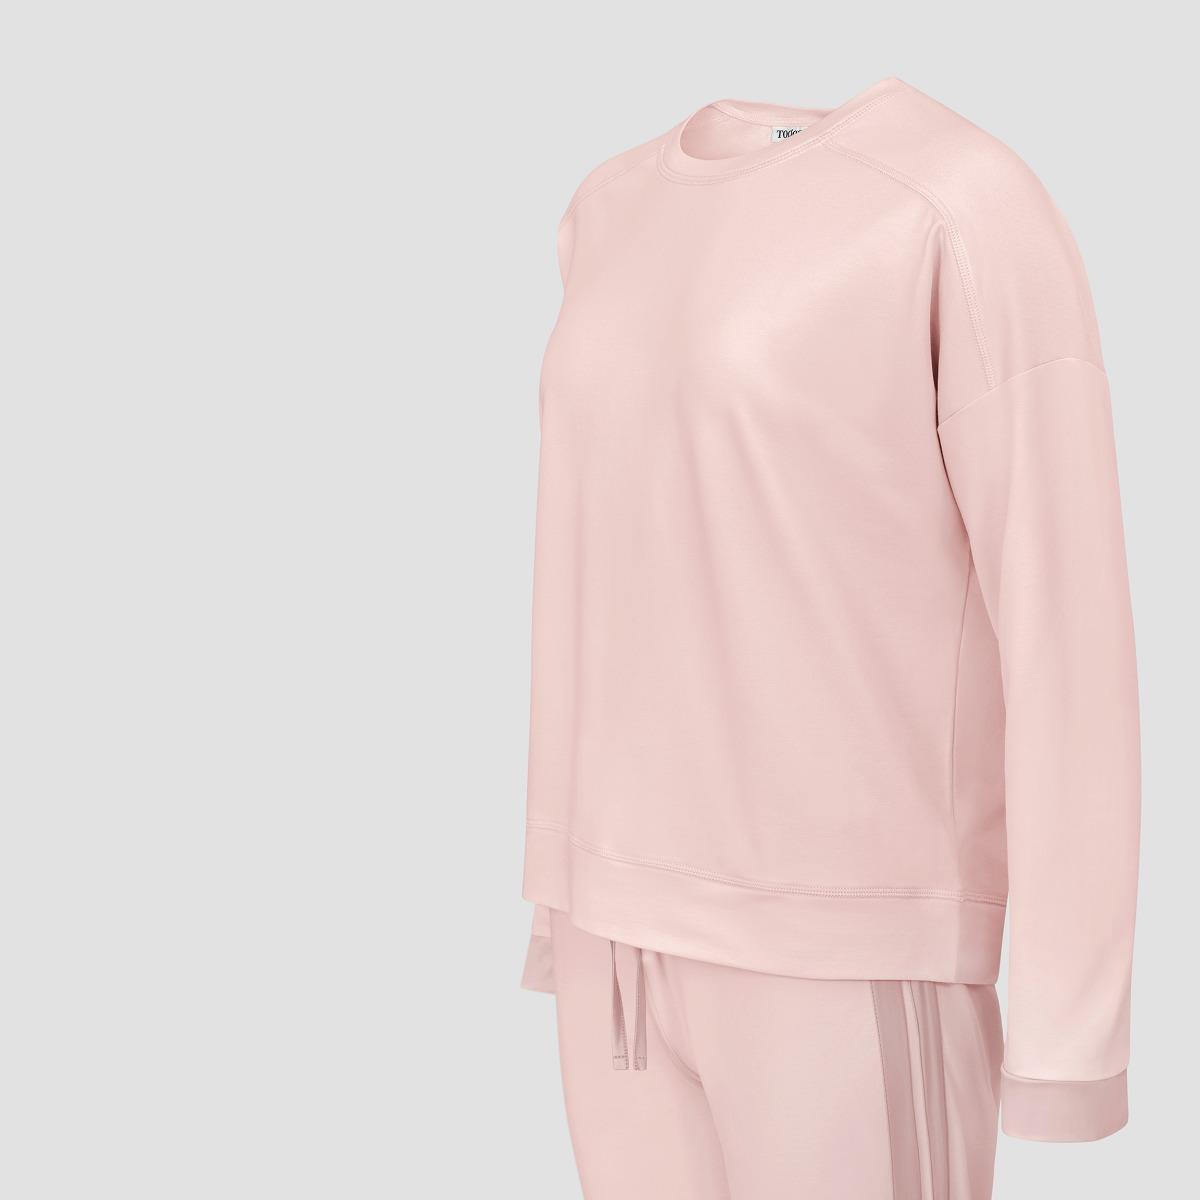 Пижама Togas Рене розовая женская l(48), цвет розовый, размер L (48) - фото 2